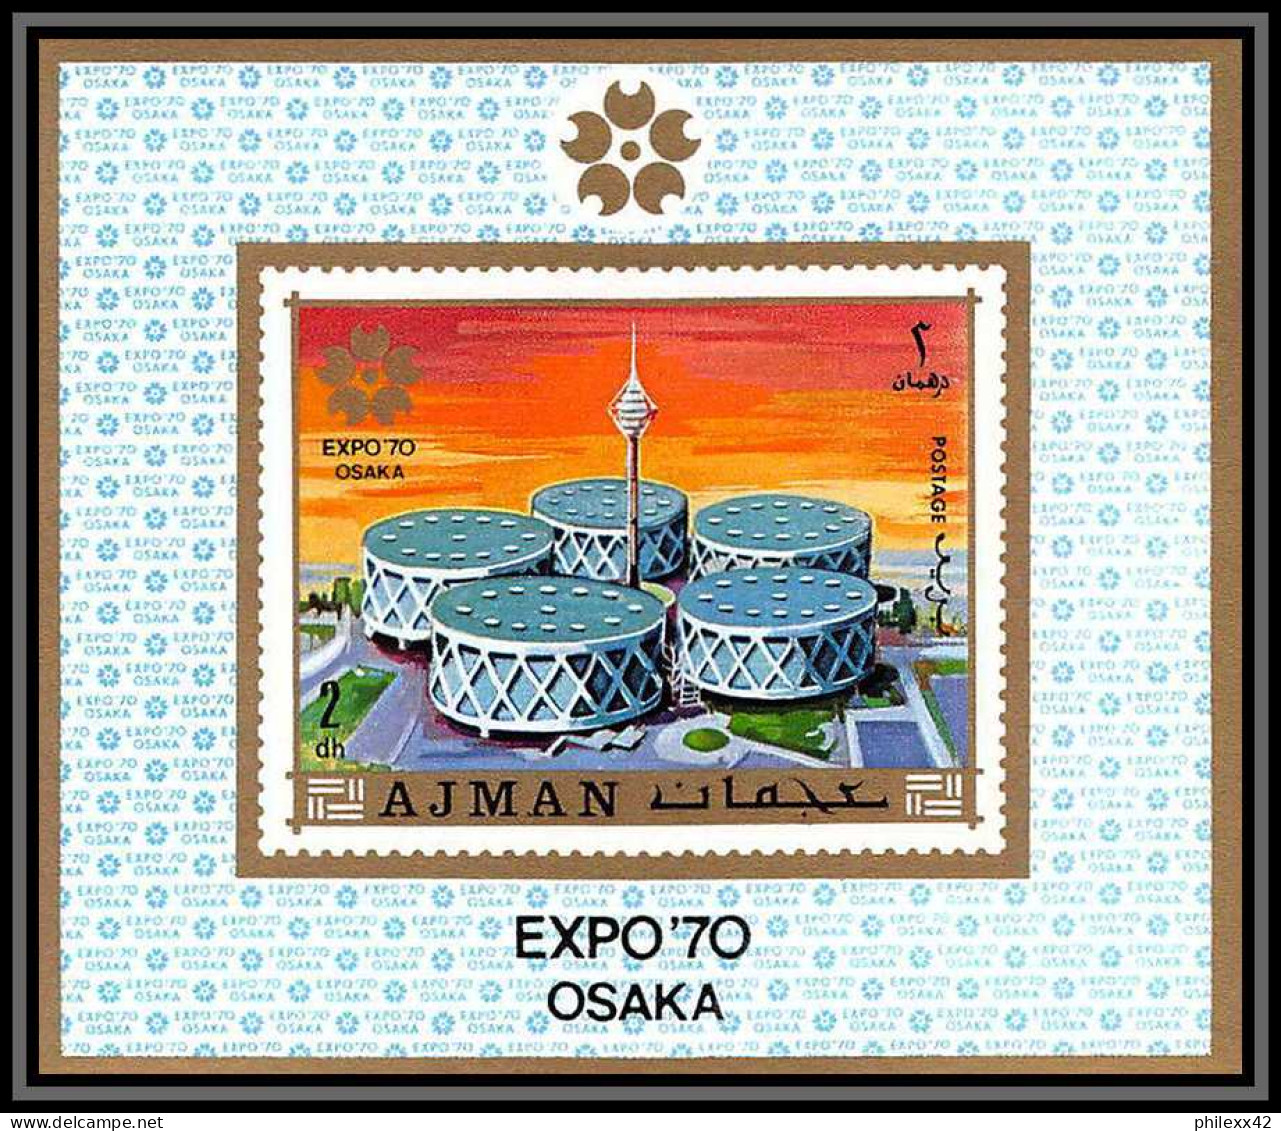 Ajman - 2975/ N°577/584 A expo'70 osaka japan universal exhibition 1970 neuf ** MNH deluxe miniature sheets